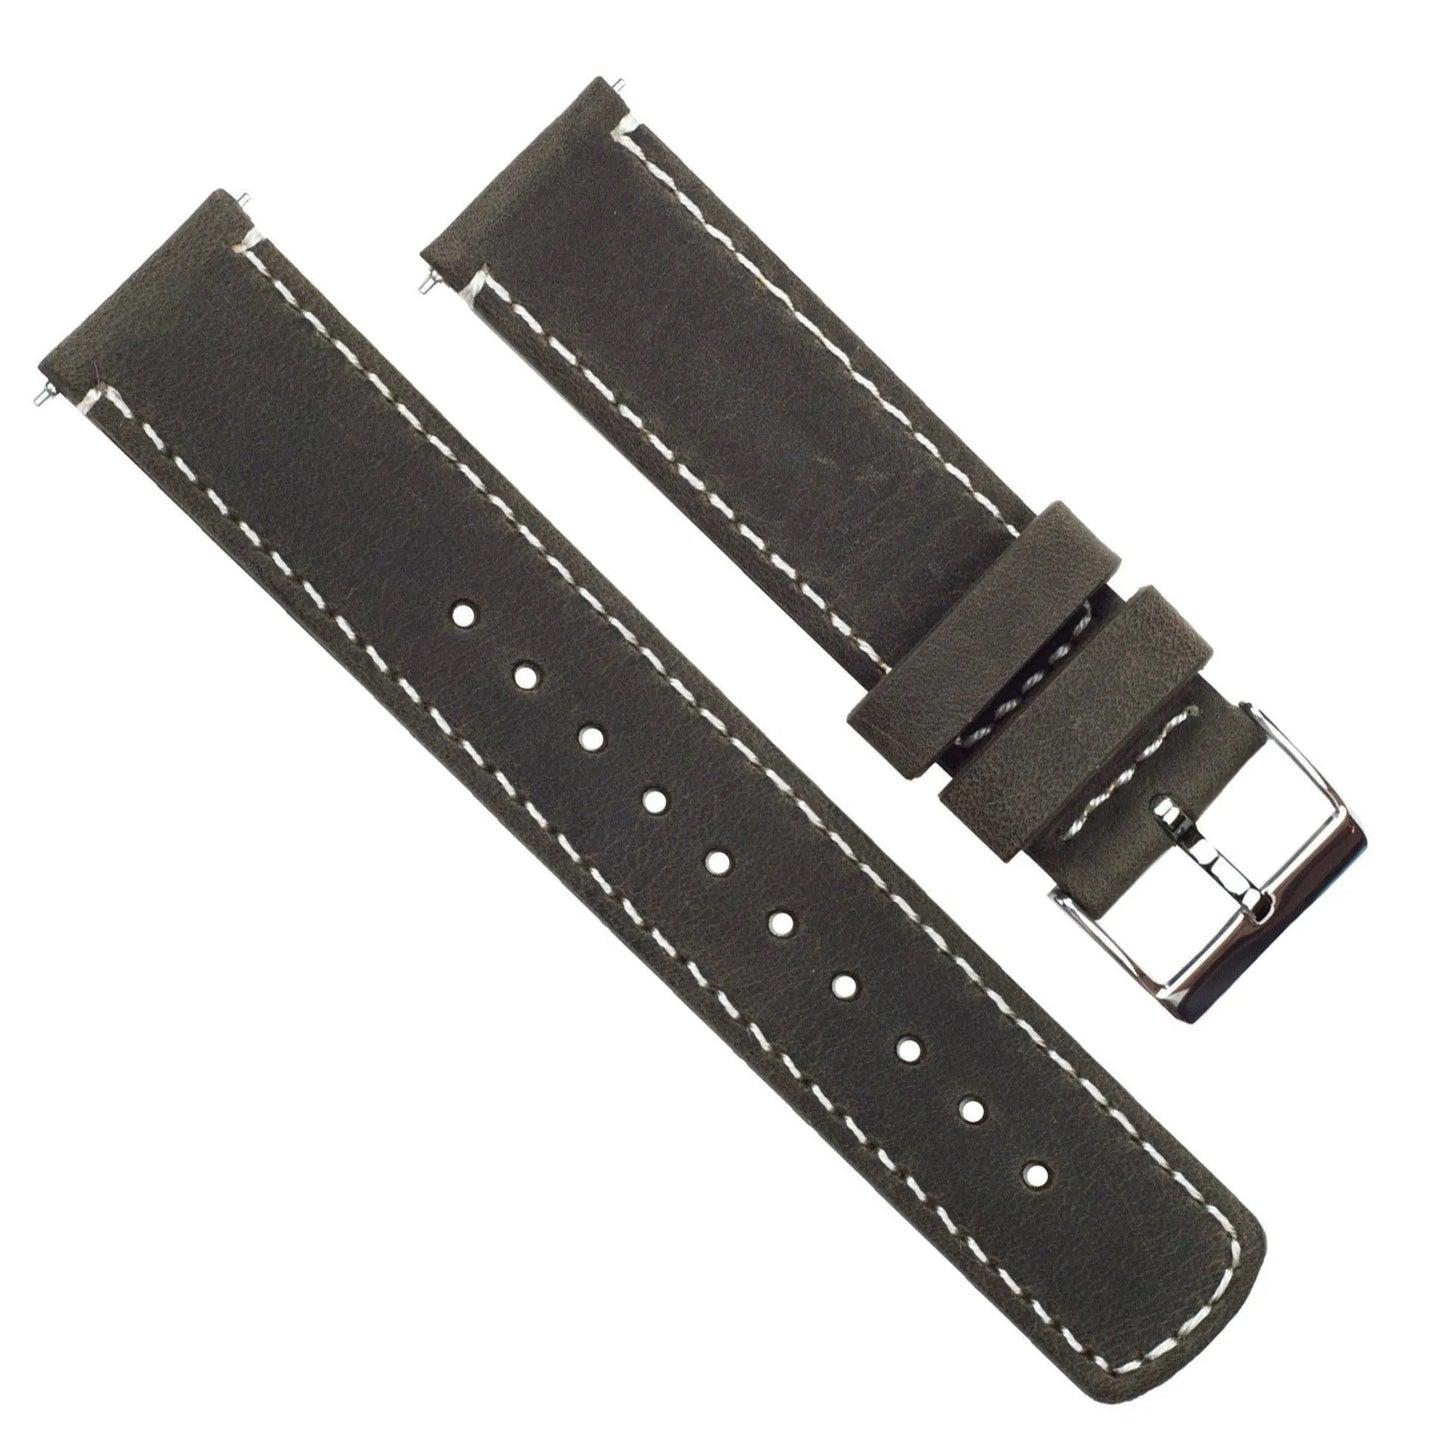 Amazfit Bip | Espresso Brown Leather & Linen White Stitching - Barton Watch Bands